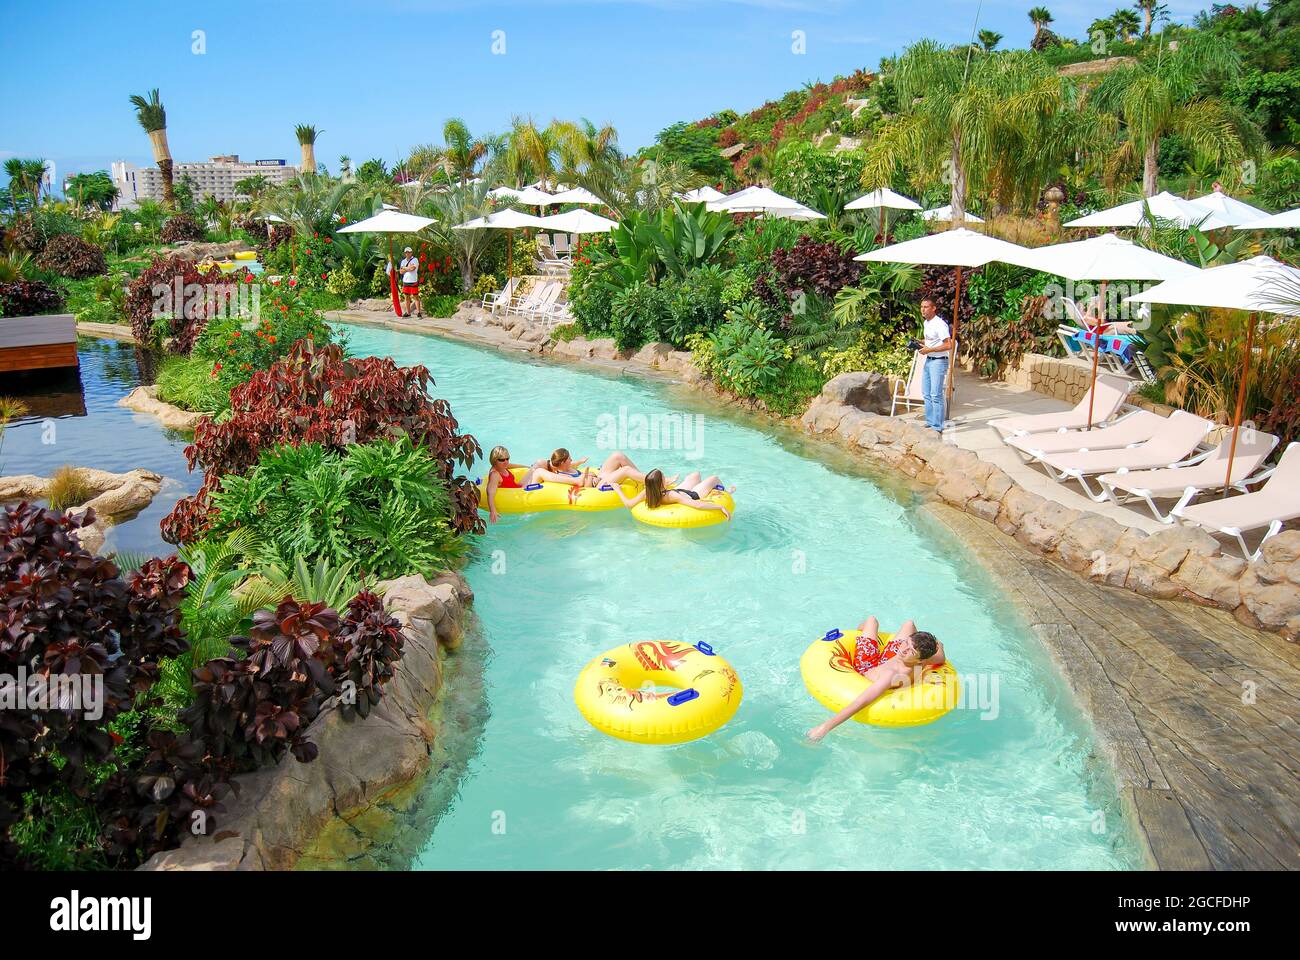 Mai Thai River Ride, parc aquatique Siam Kingdom Theme Park, Costa Adeje, Tenerife, Canaries, Espagne Banque D'Images